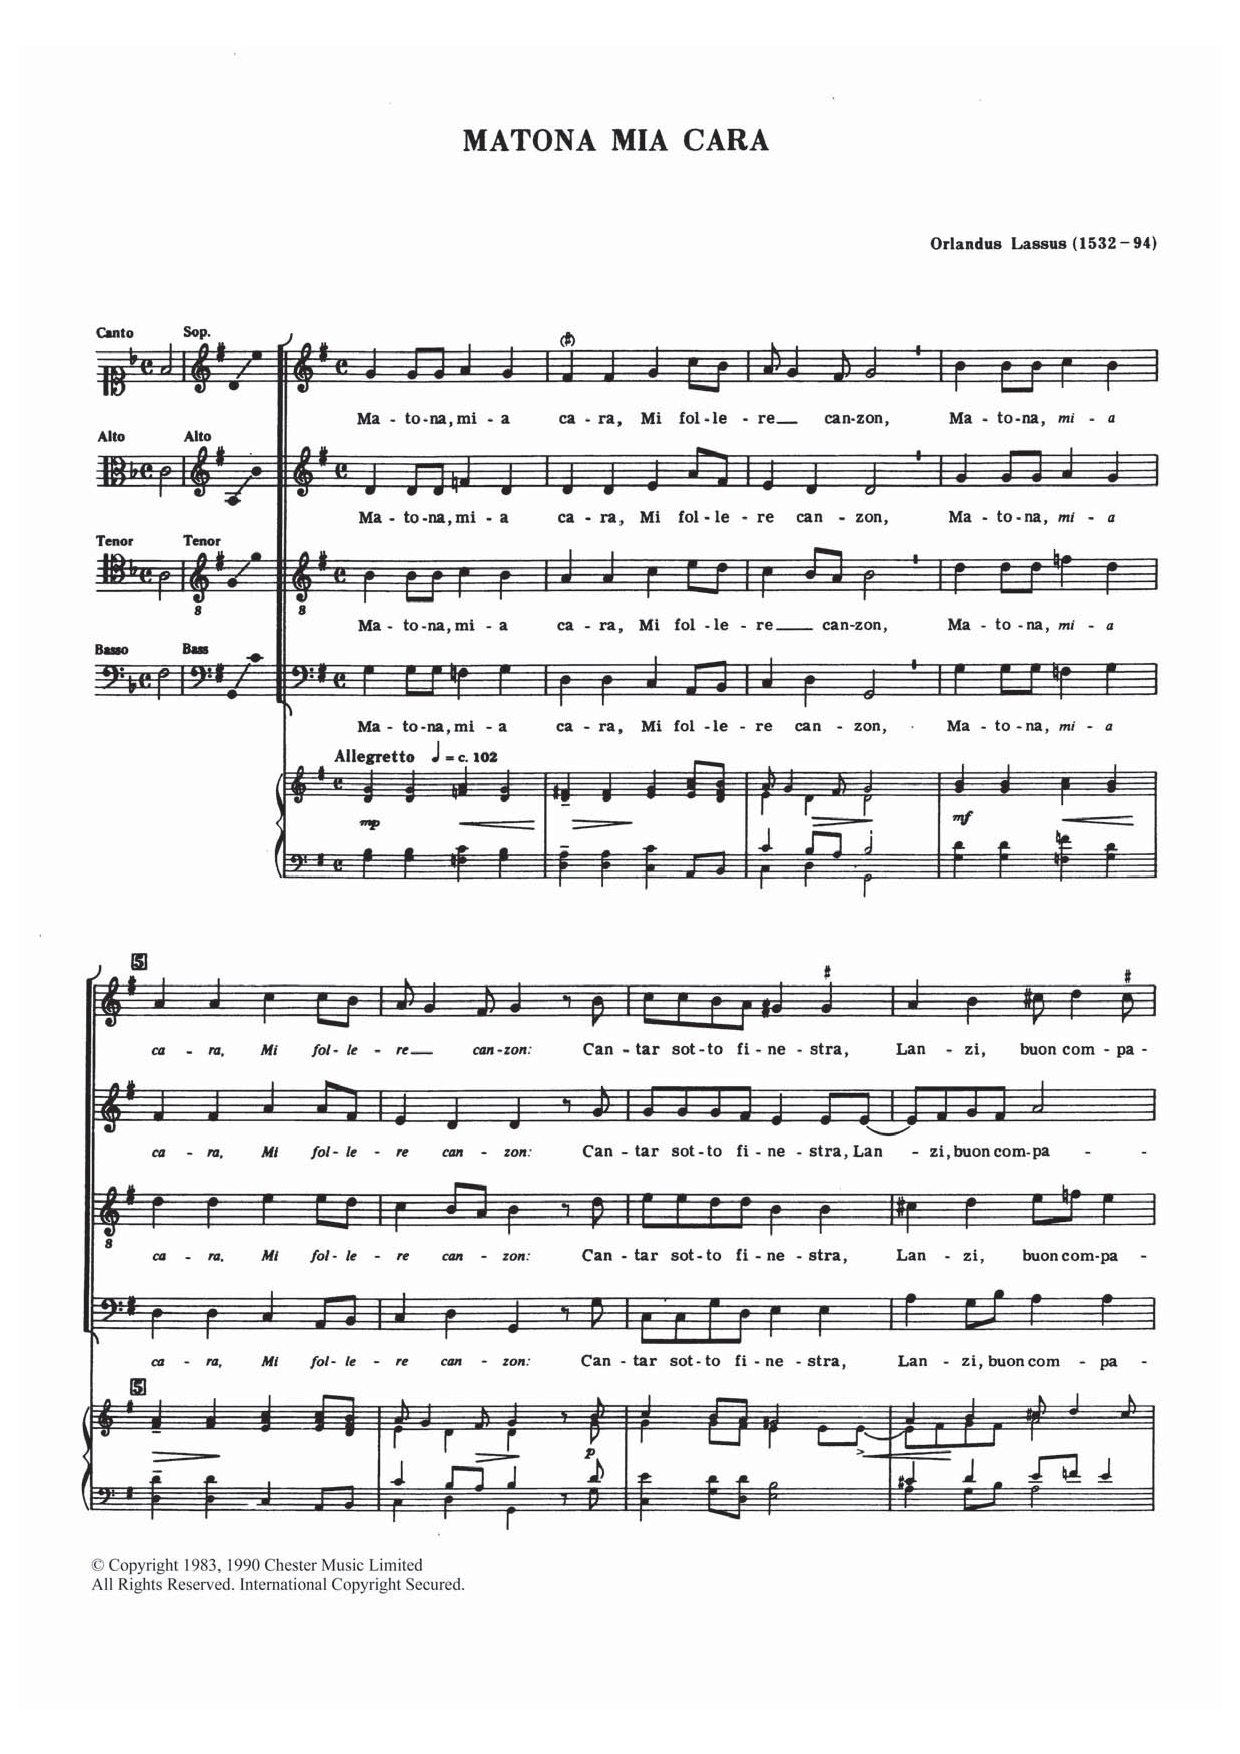 Orlandus Lassus Matona Mia Cara Sheet Music Notes & Chords for Choir - Download or Print PDF